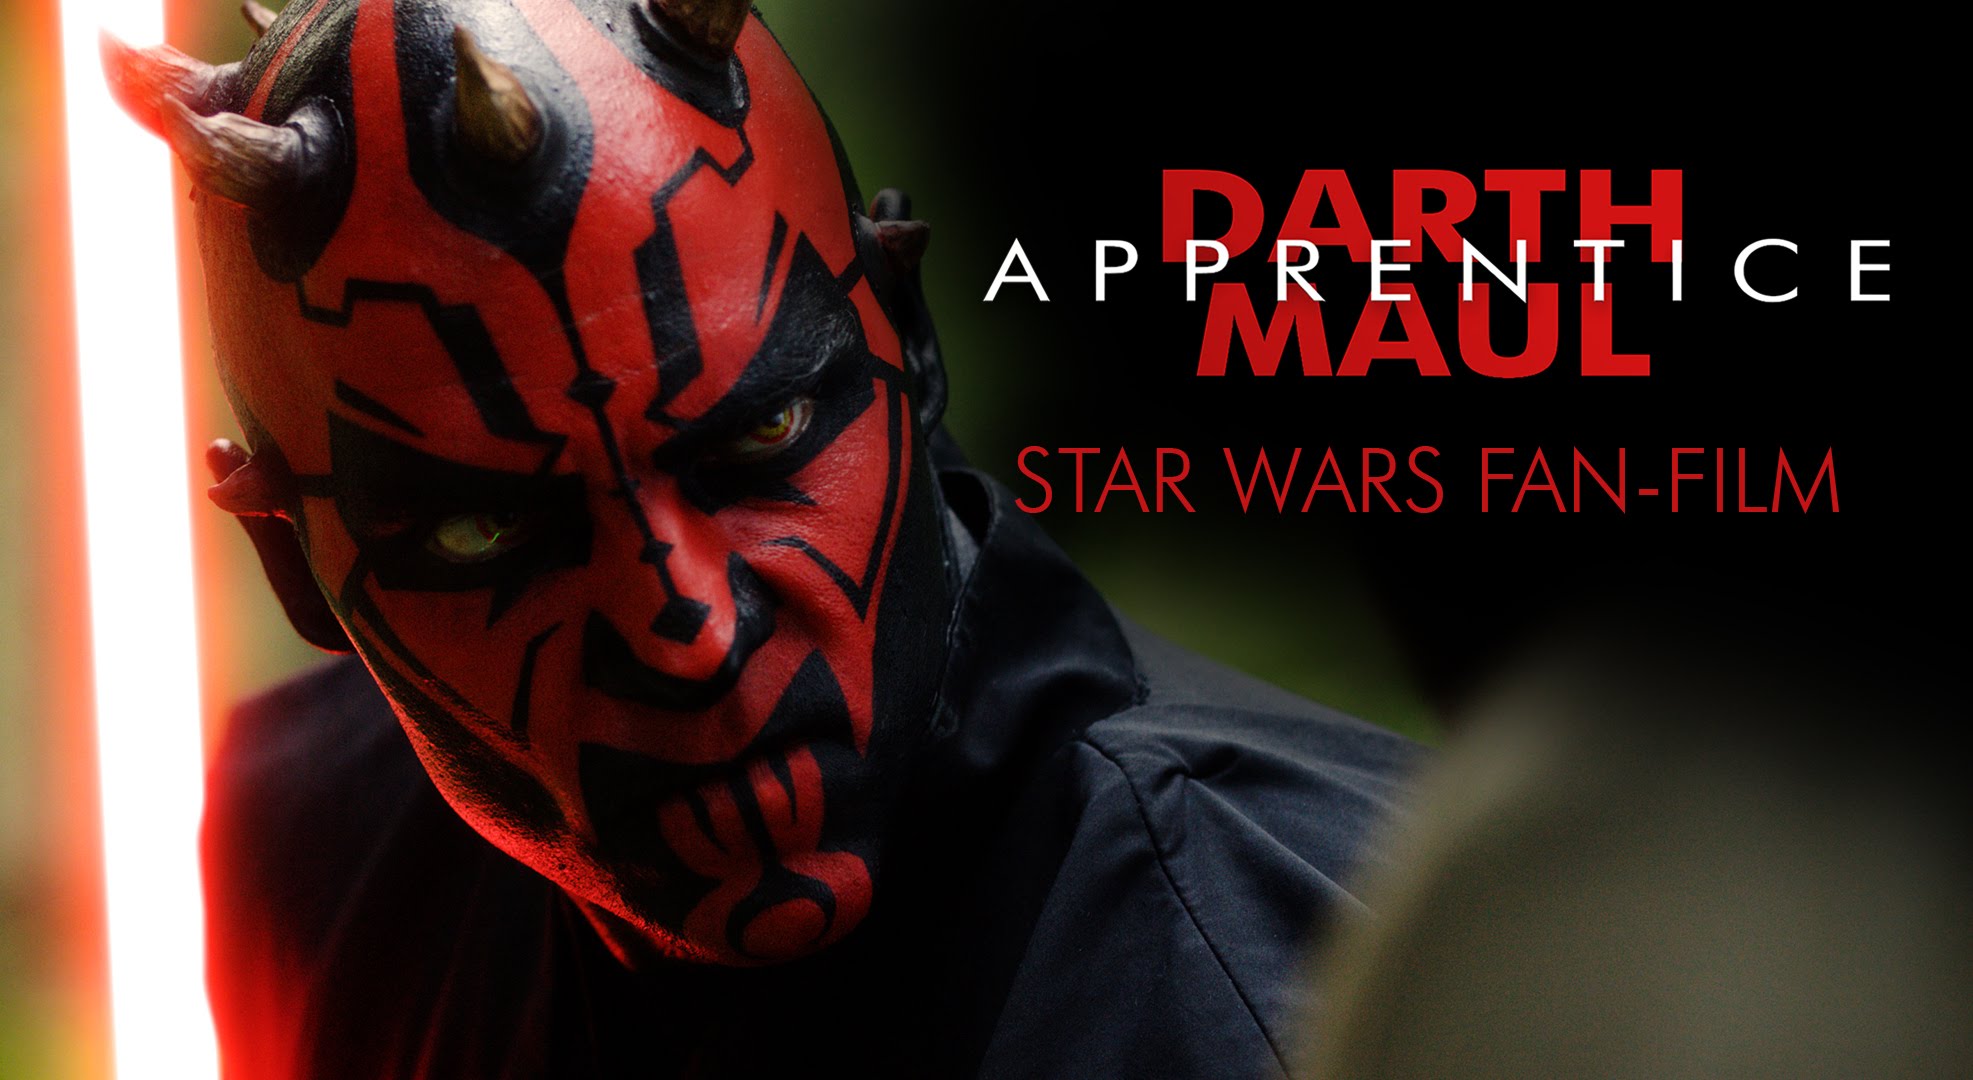 DARTH MAUL: Apprentice - A Star Wars Fan-Film 1